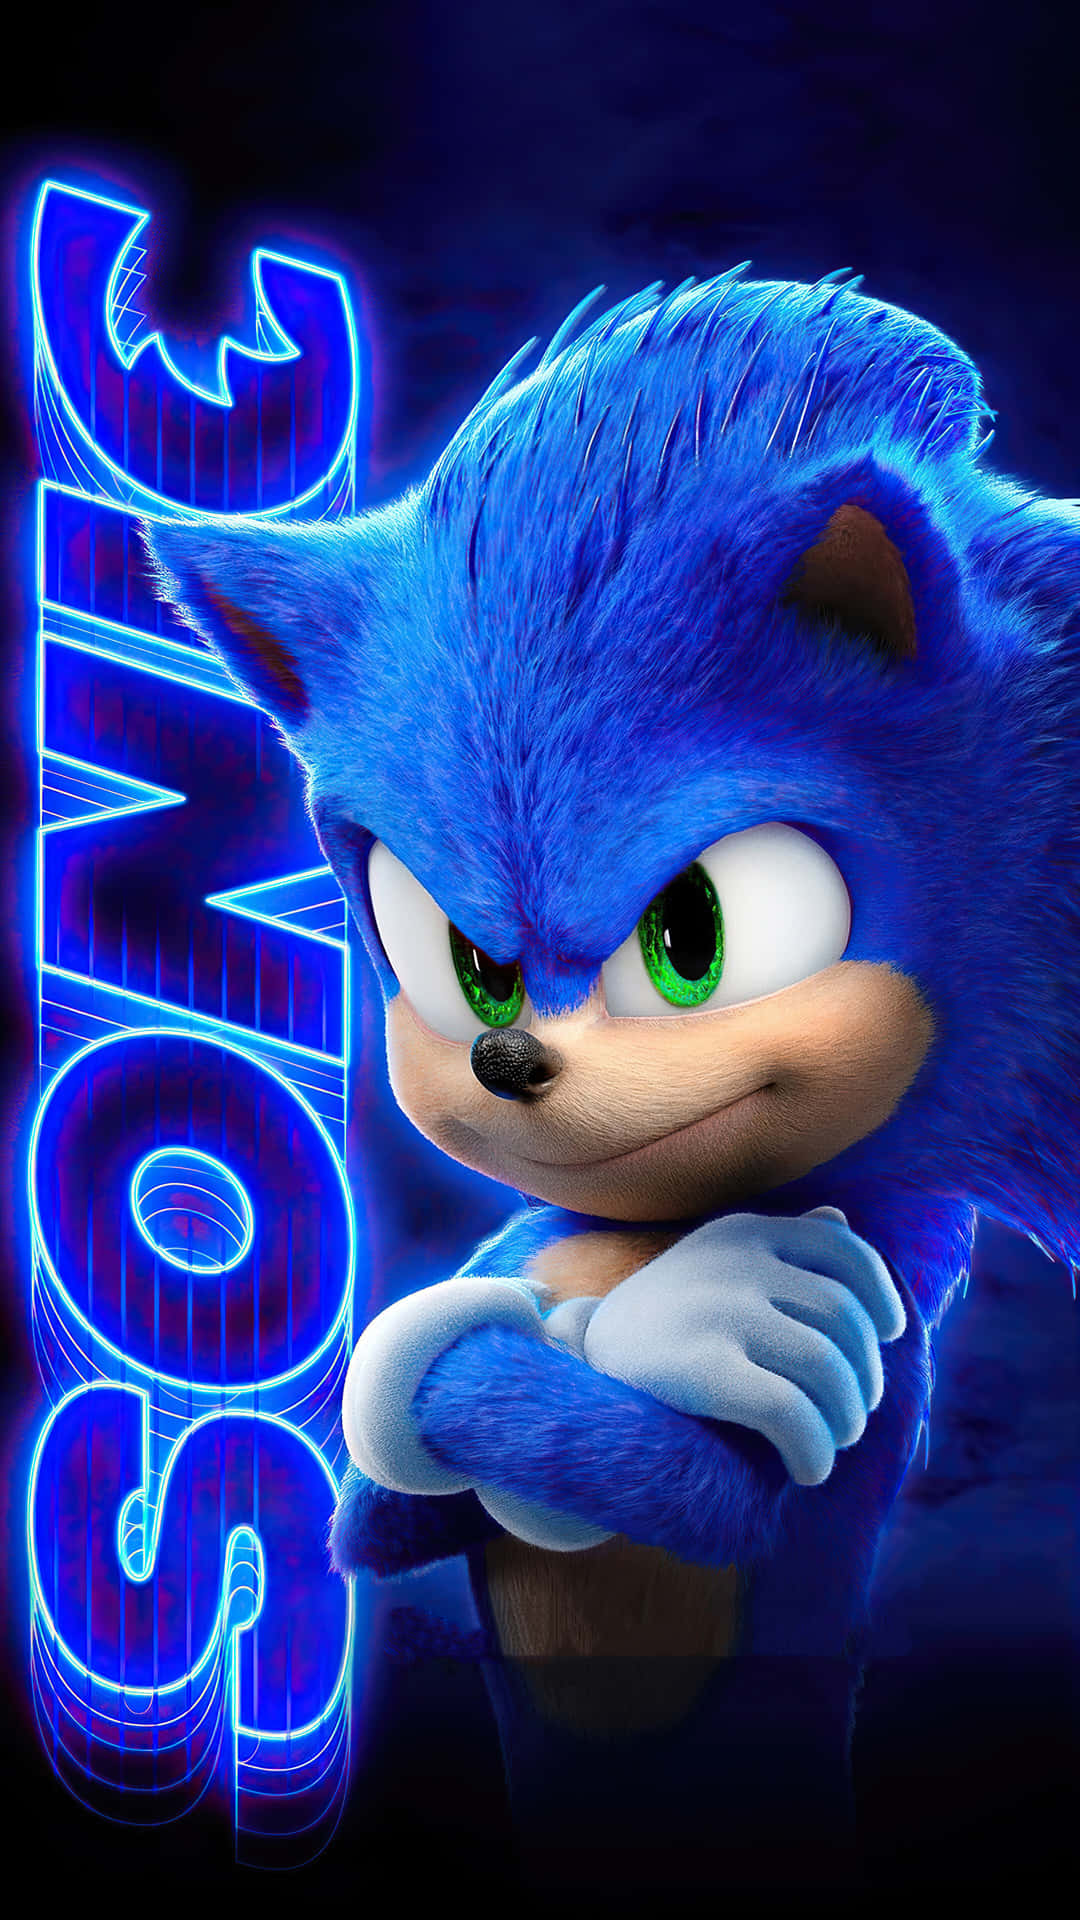 Sonic the Hedgehog (2020) - Vidéo Dailymotion